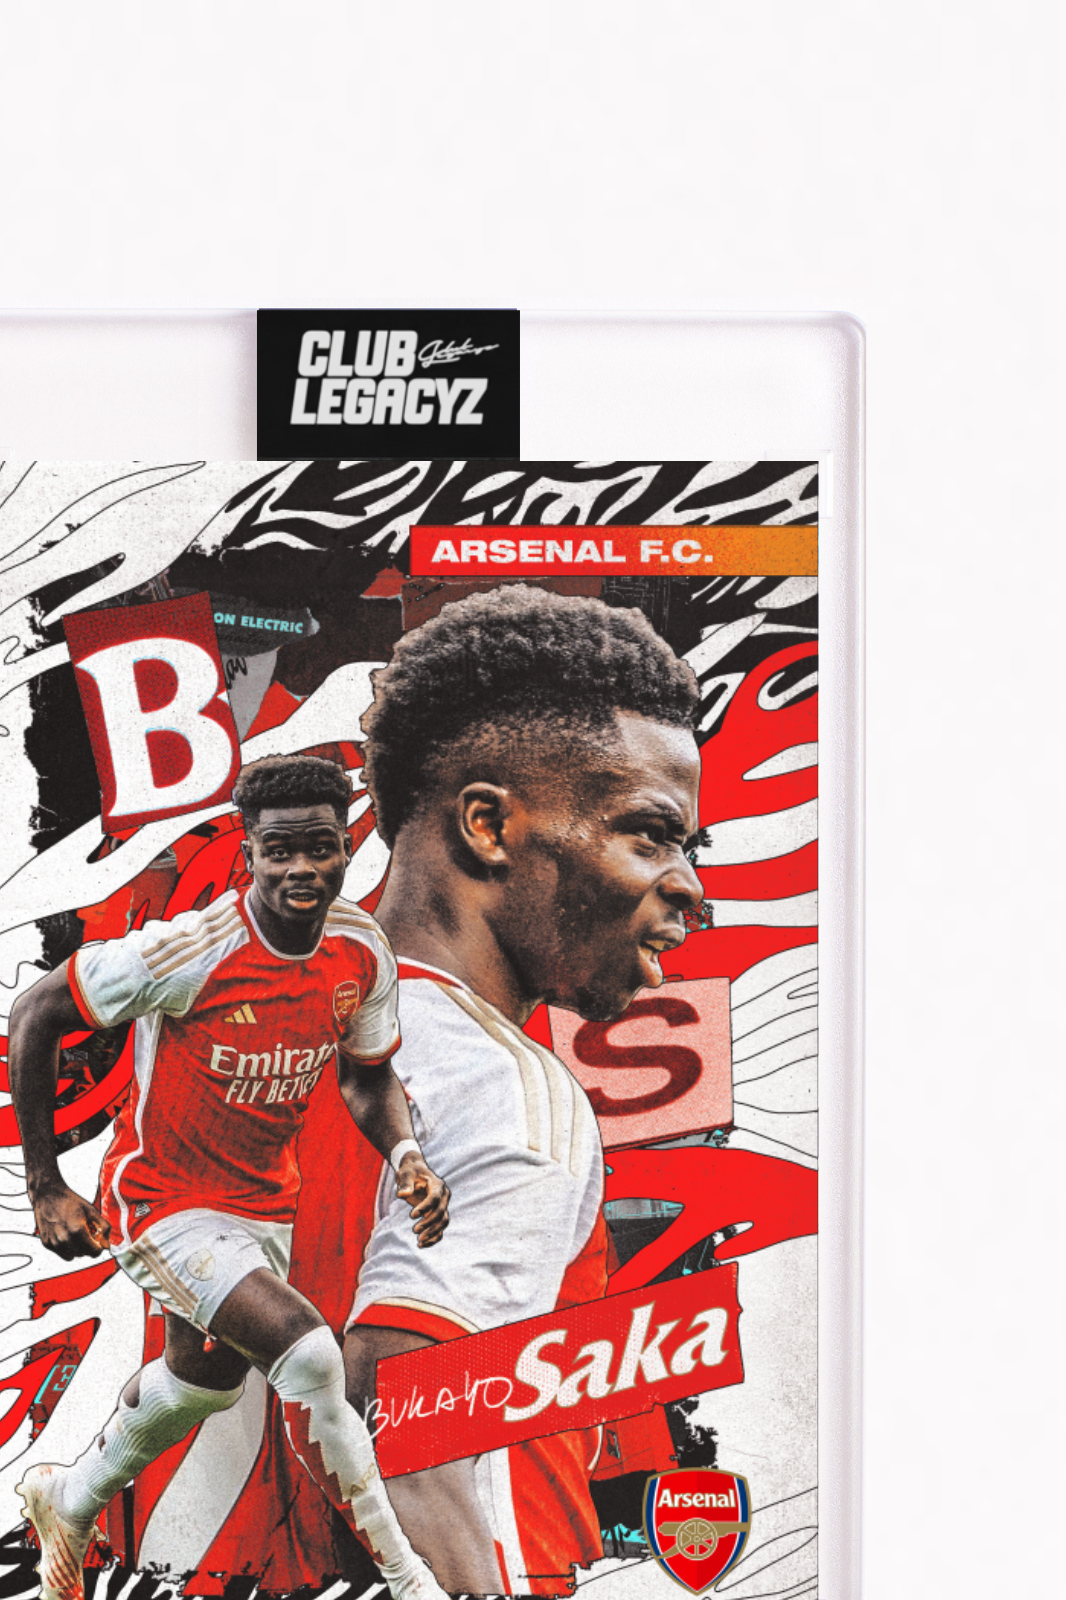 Arsenal FC - Bukayo Saka Icon limited to 50